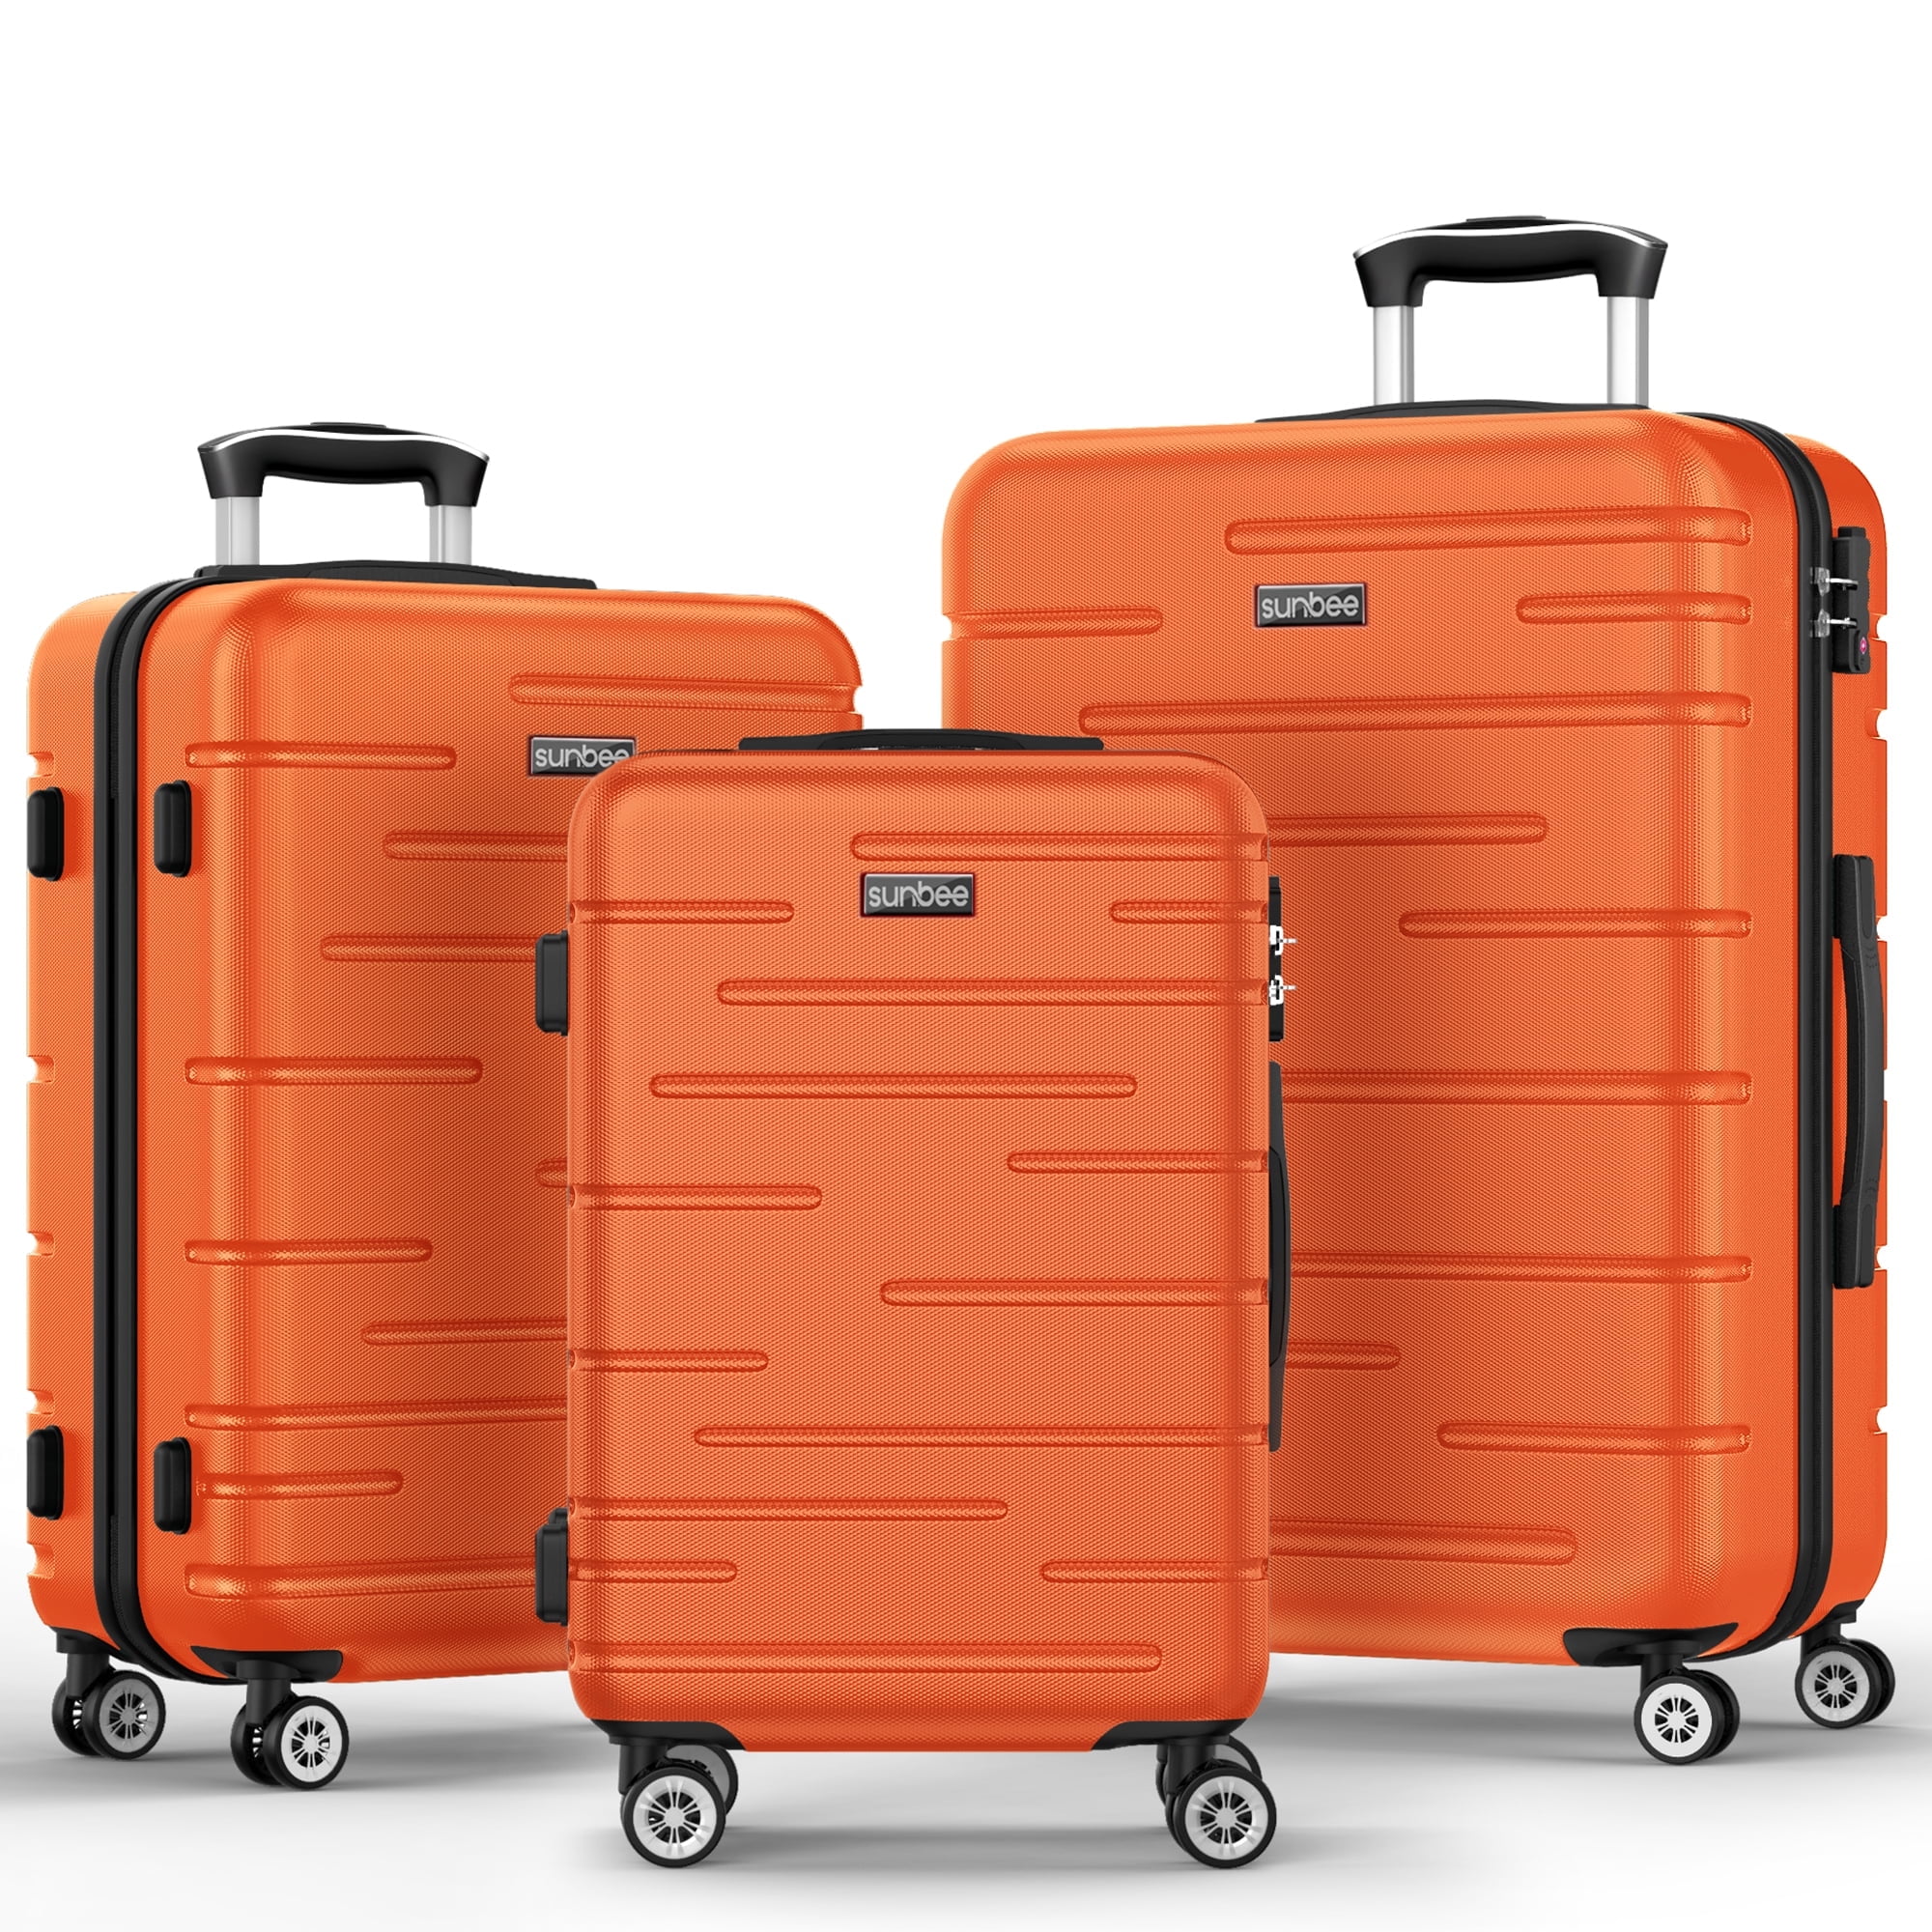 Sunbee 3 Piece Luggage Sets Hardshell Hardside TSA Lock Lightweight Durable Spinner Wheels Suitcase